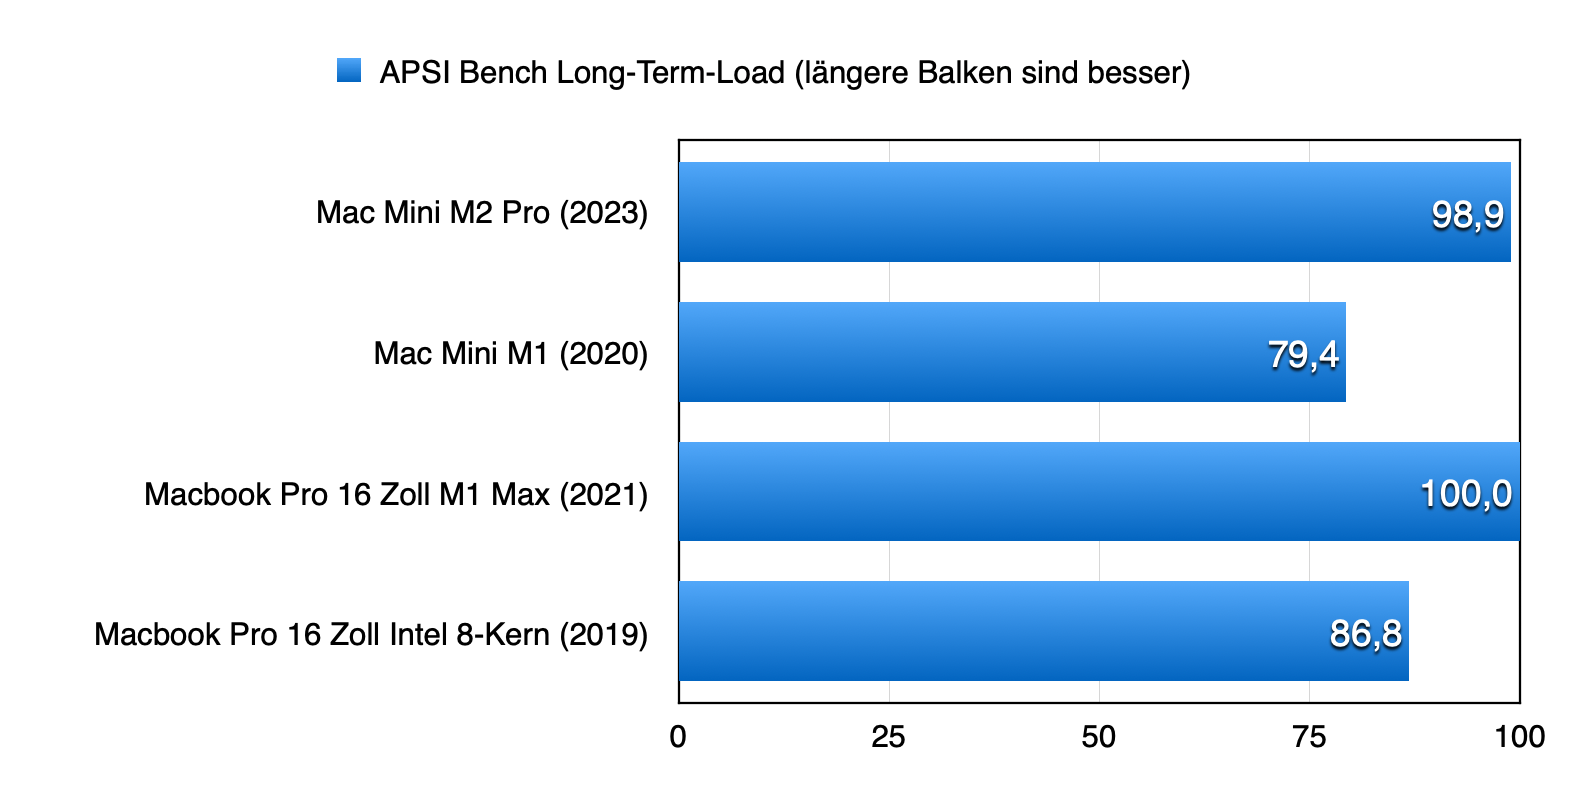 APSI Bench Long-Term-Load